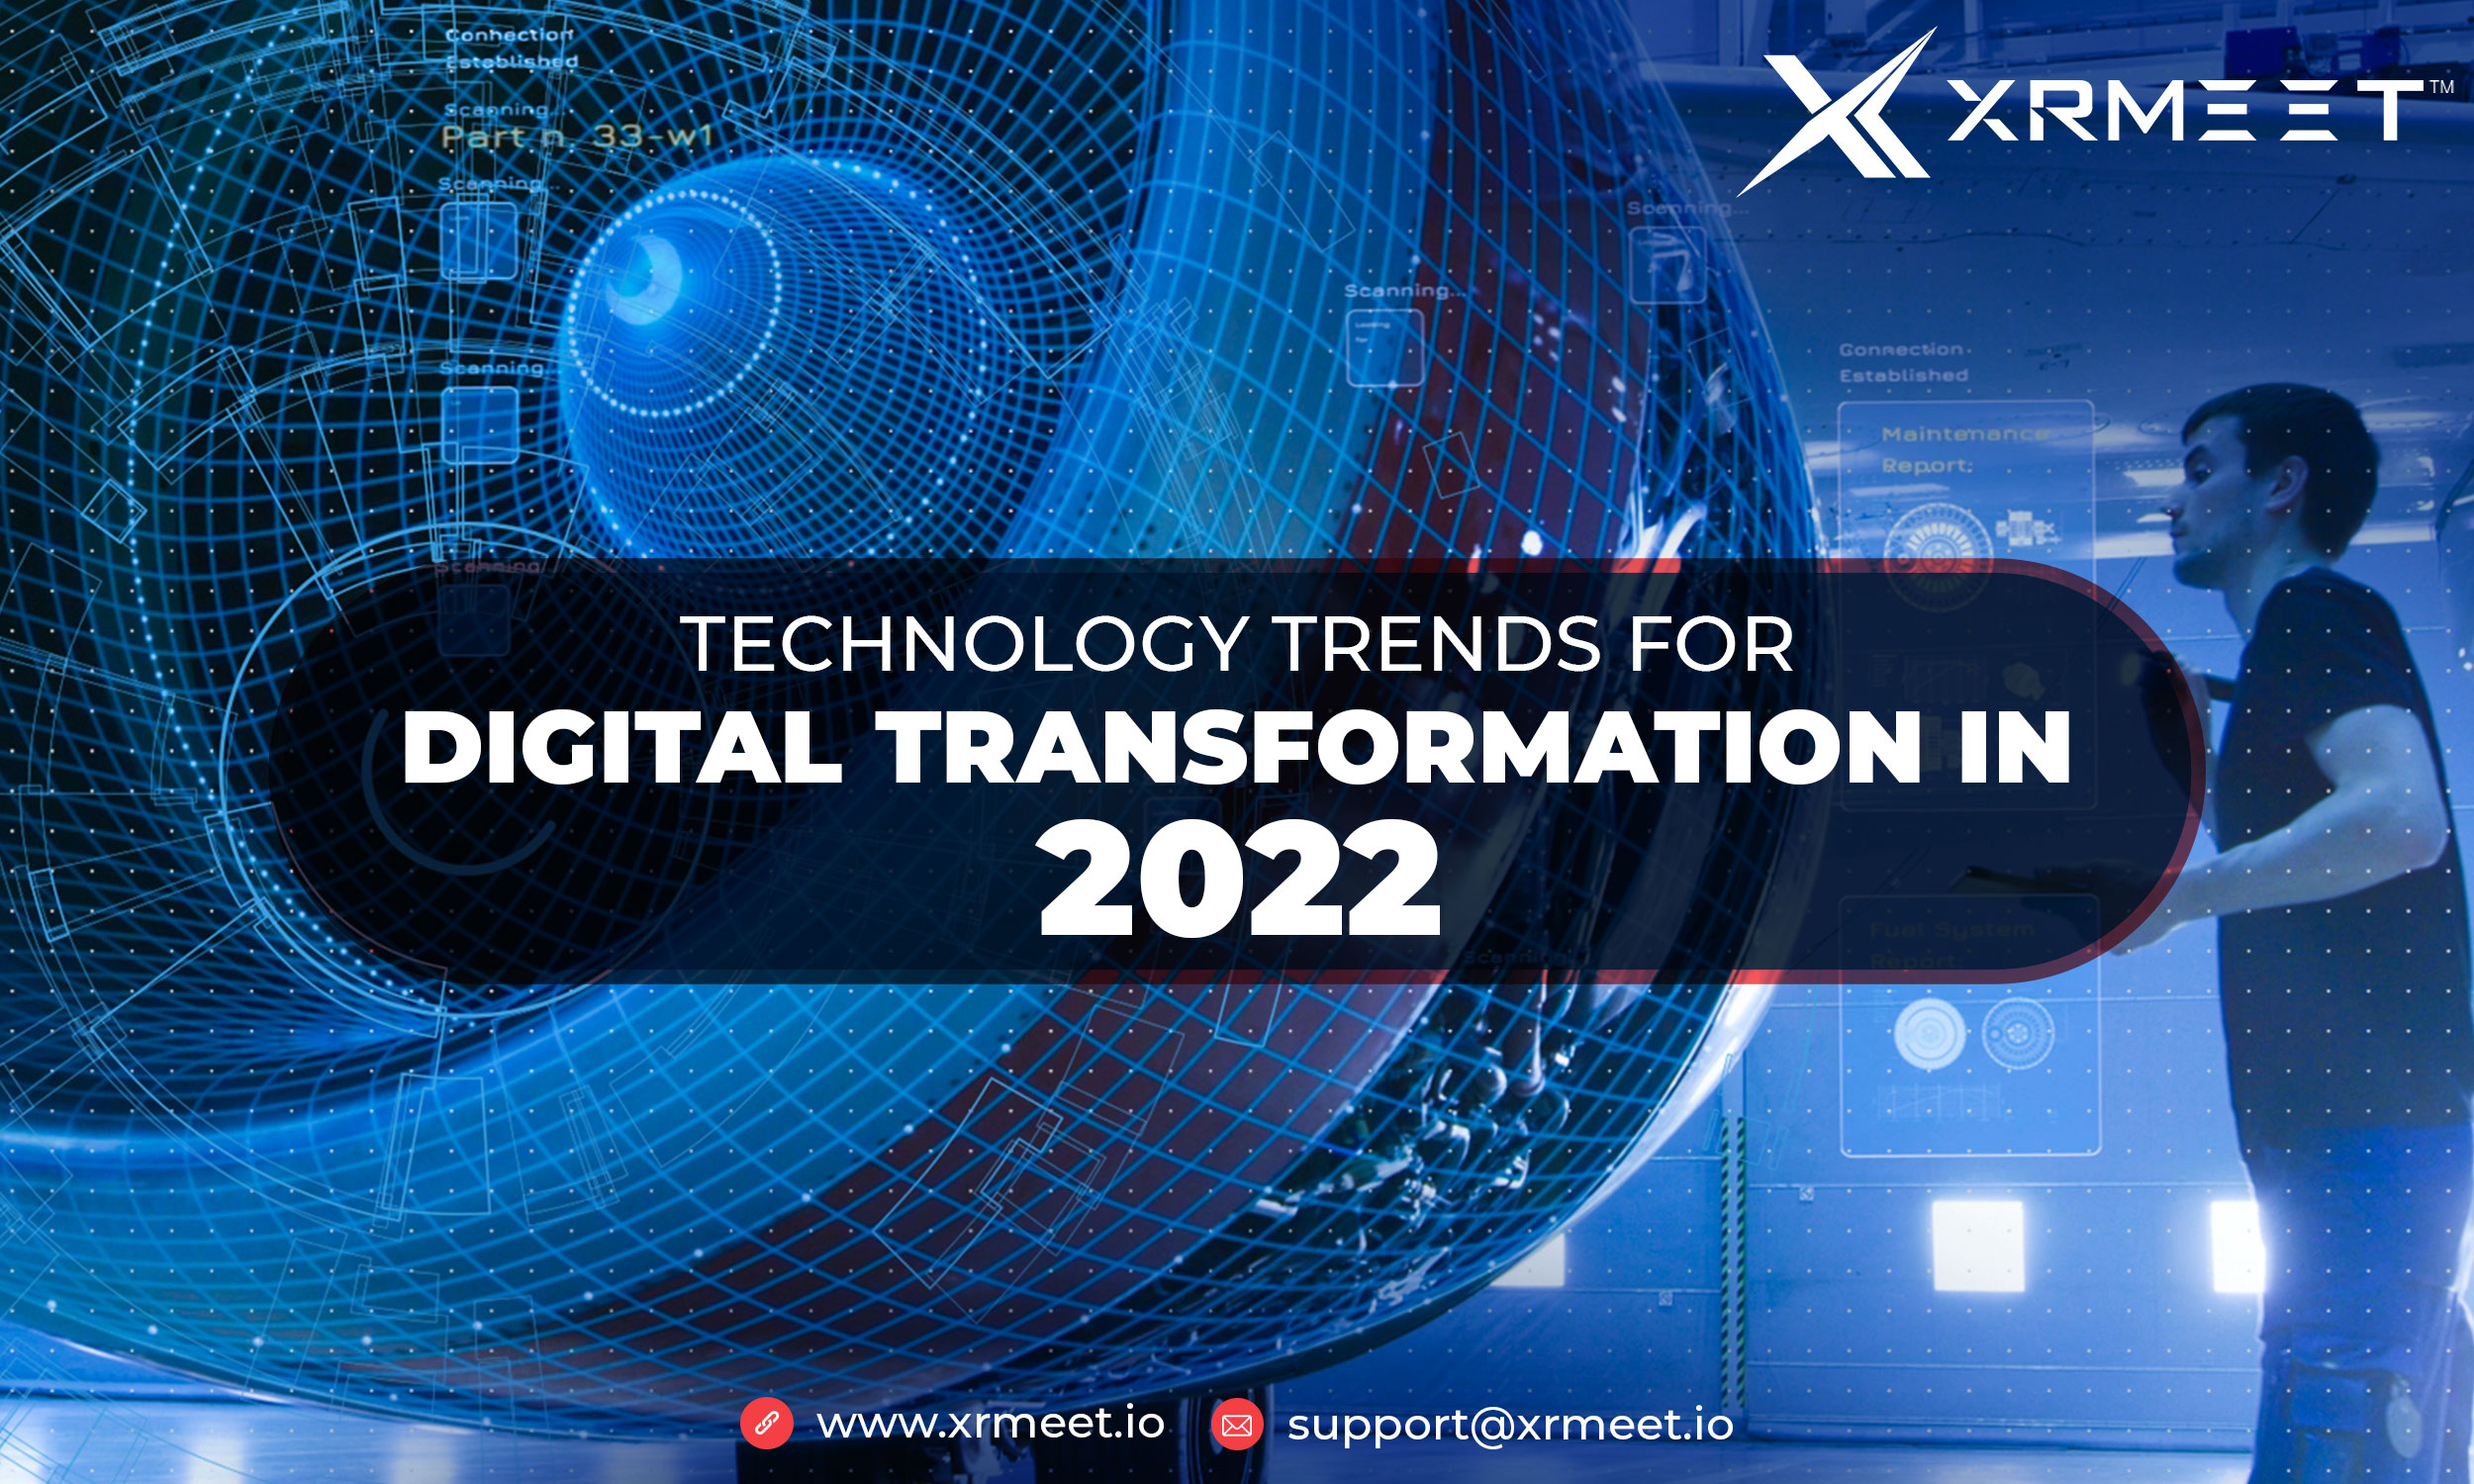 Technology trends in digital transformation in 2022